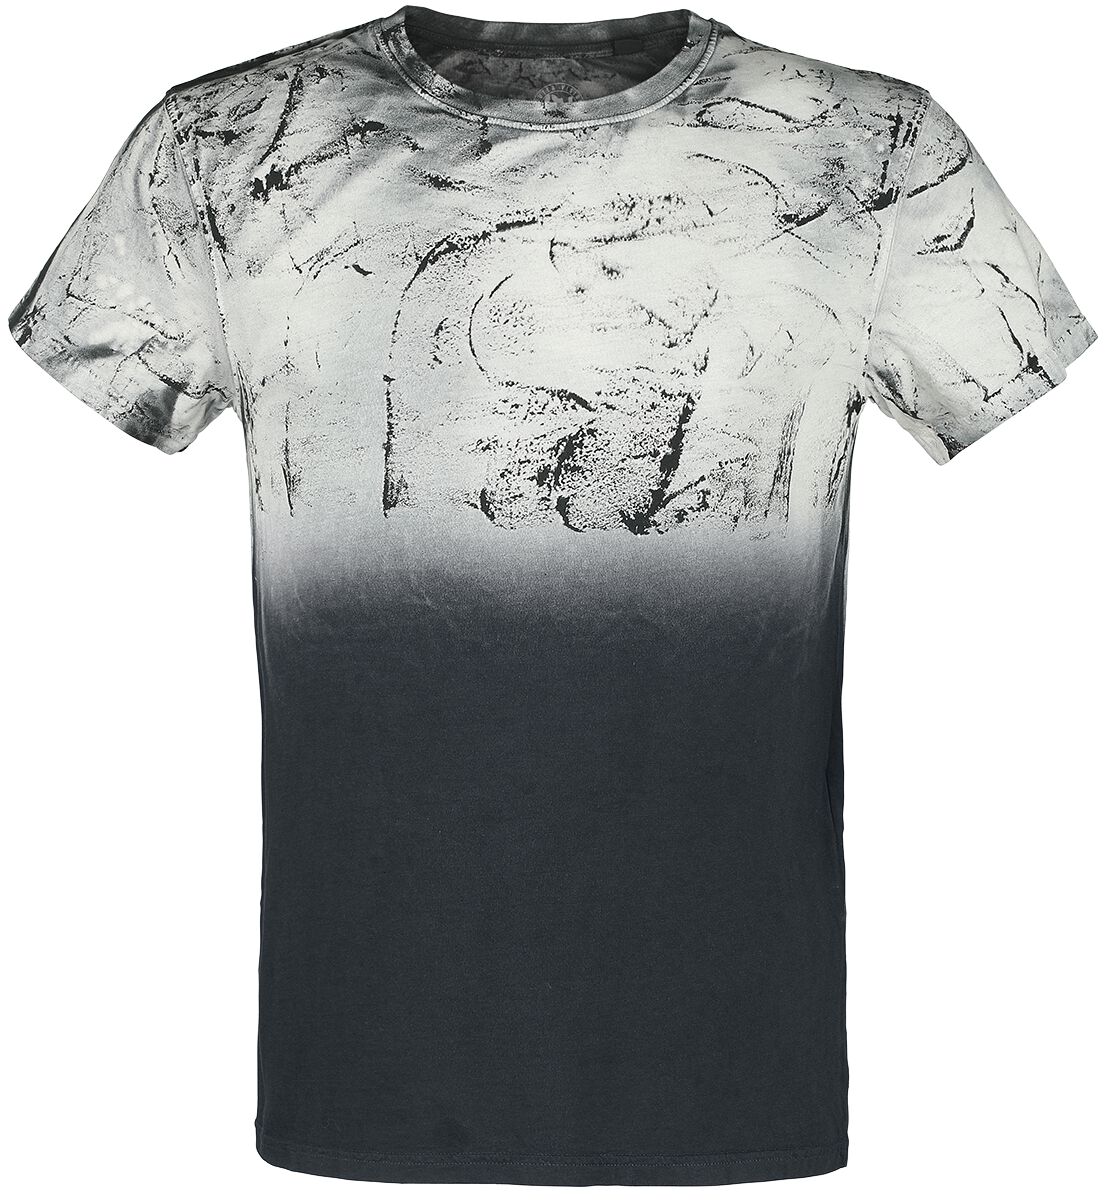 Outer Vision Man's T-Shirt Spatolato T-Shirt schwarz grau in S von Outer Vision